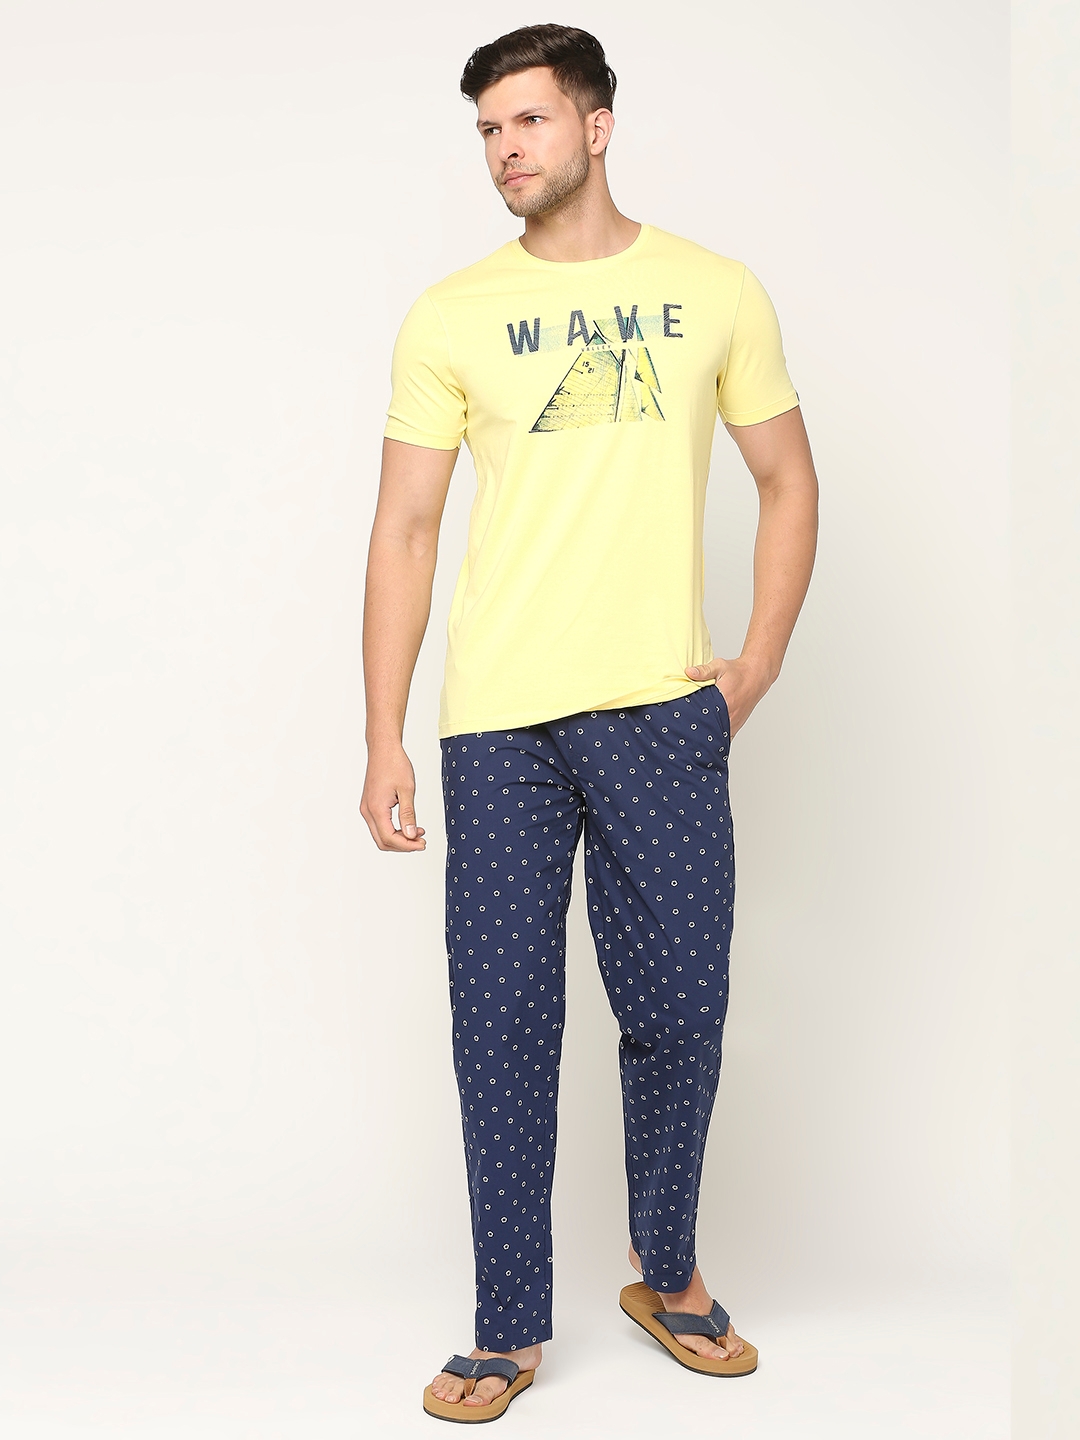 Underjeans by Spykar Premium Cotton Printed Men Navy Pyjama